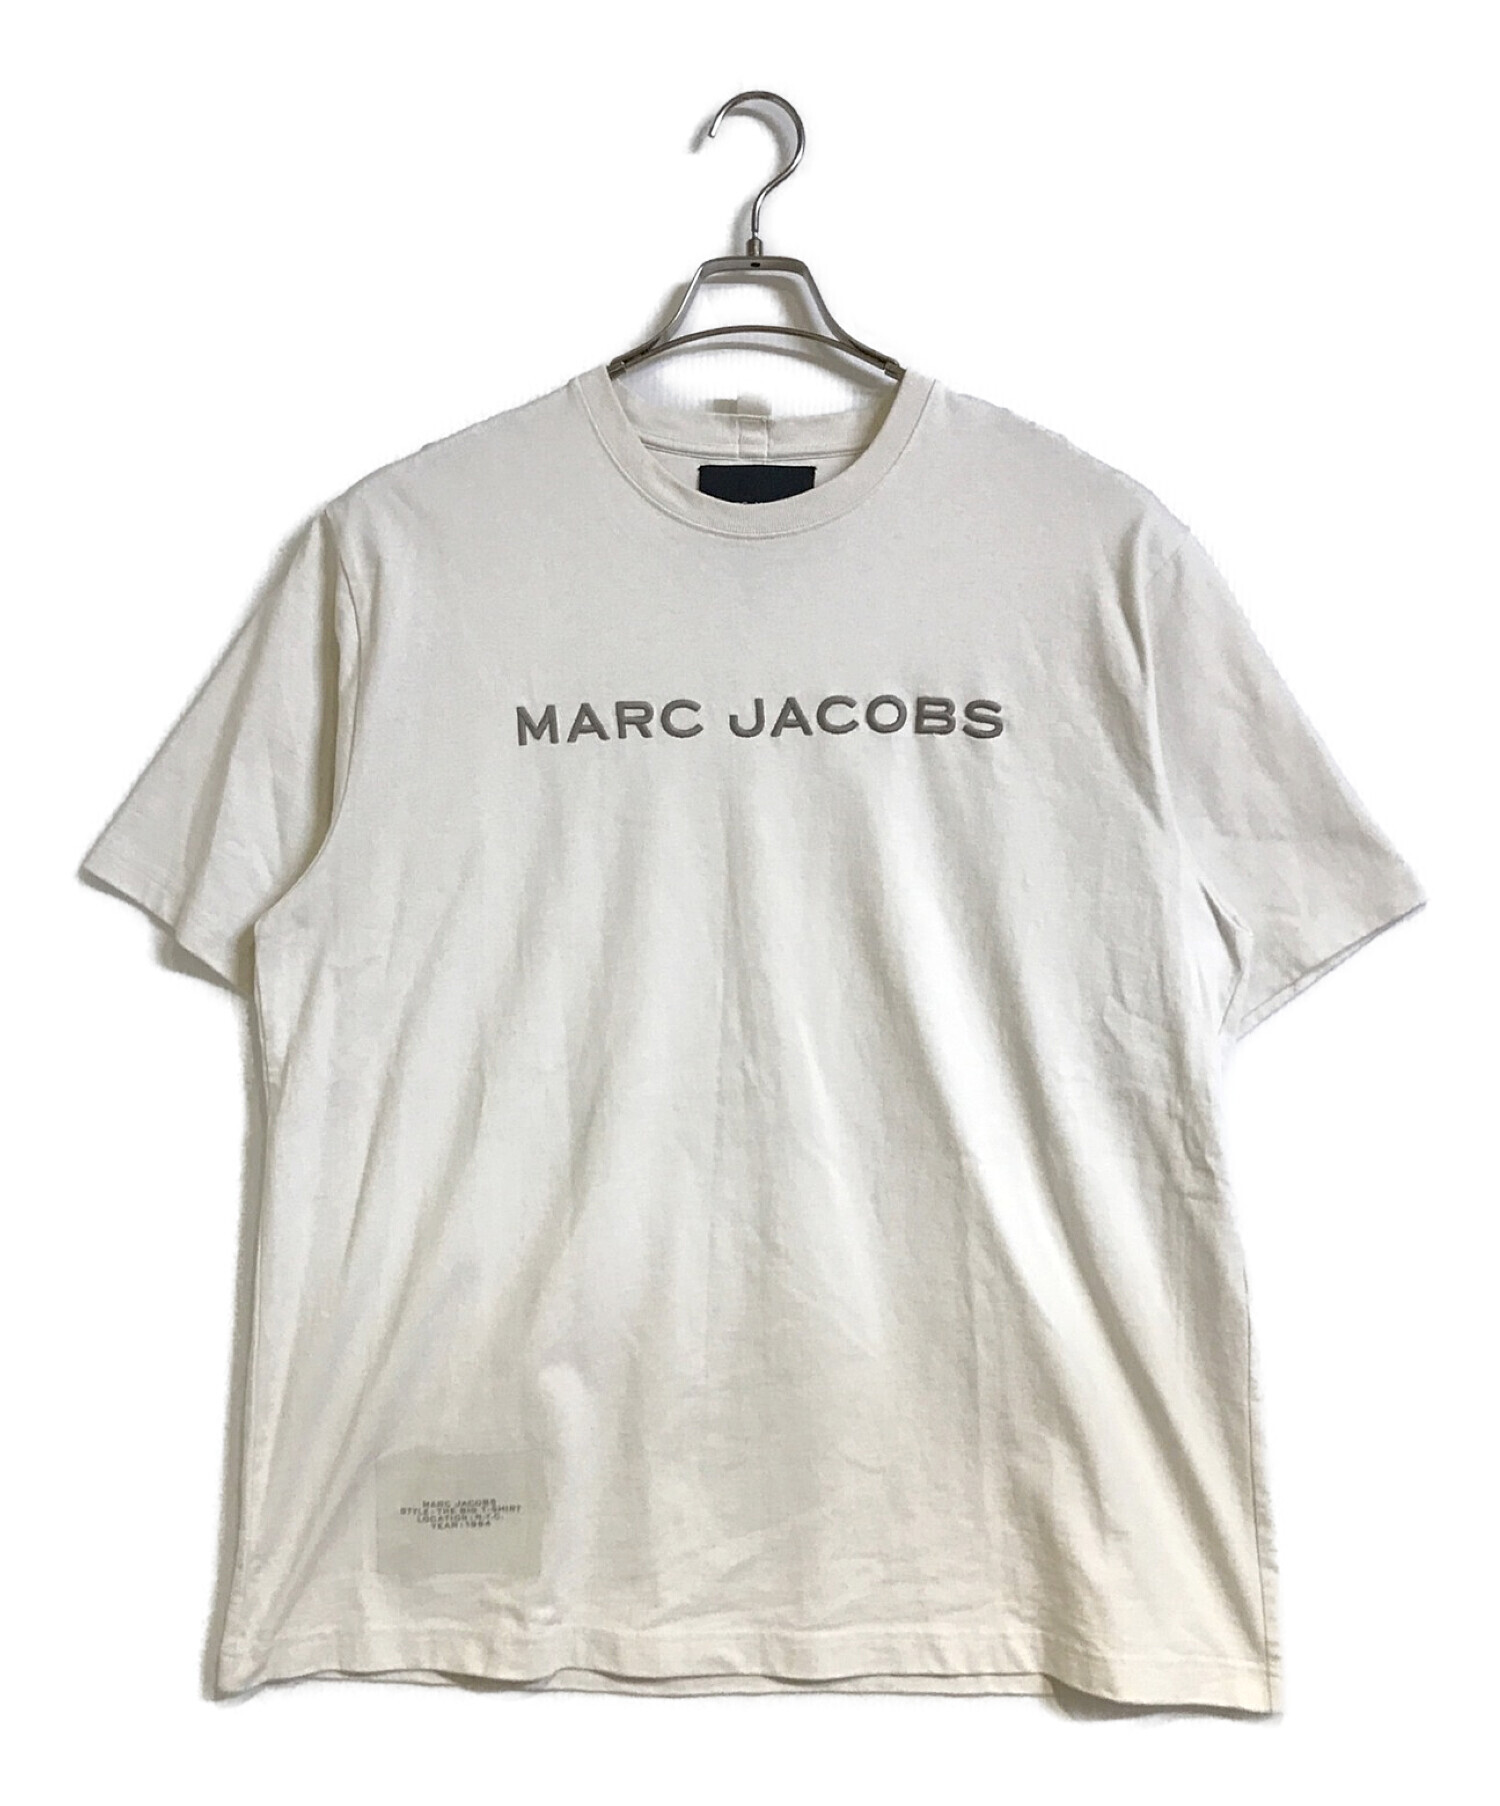 MARC JACOBS (マーク ジェイコブス) THE BIG T-SHIRT ホワイト サイズ:S